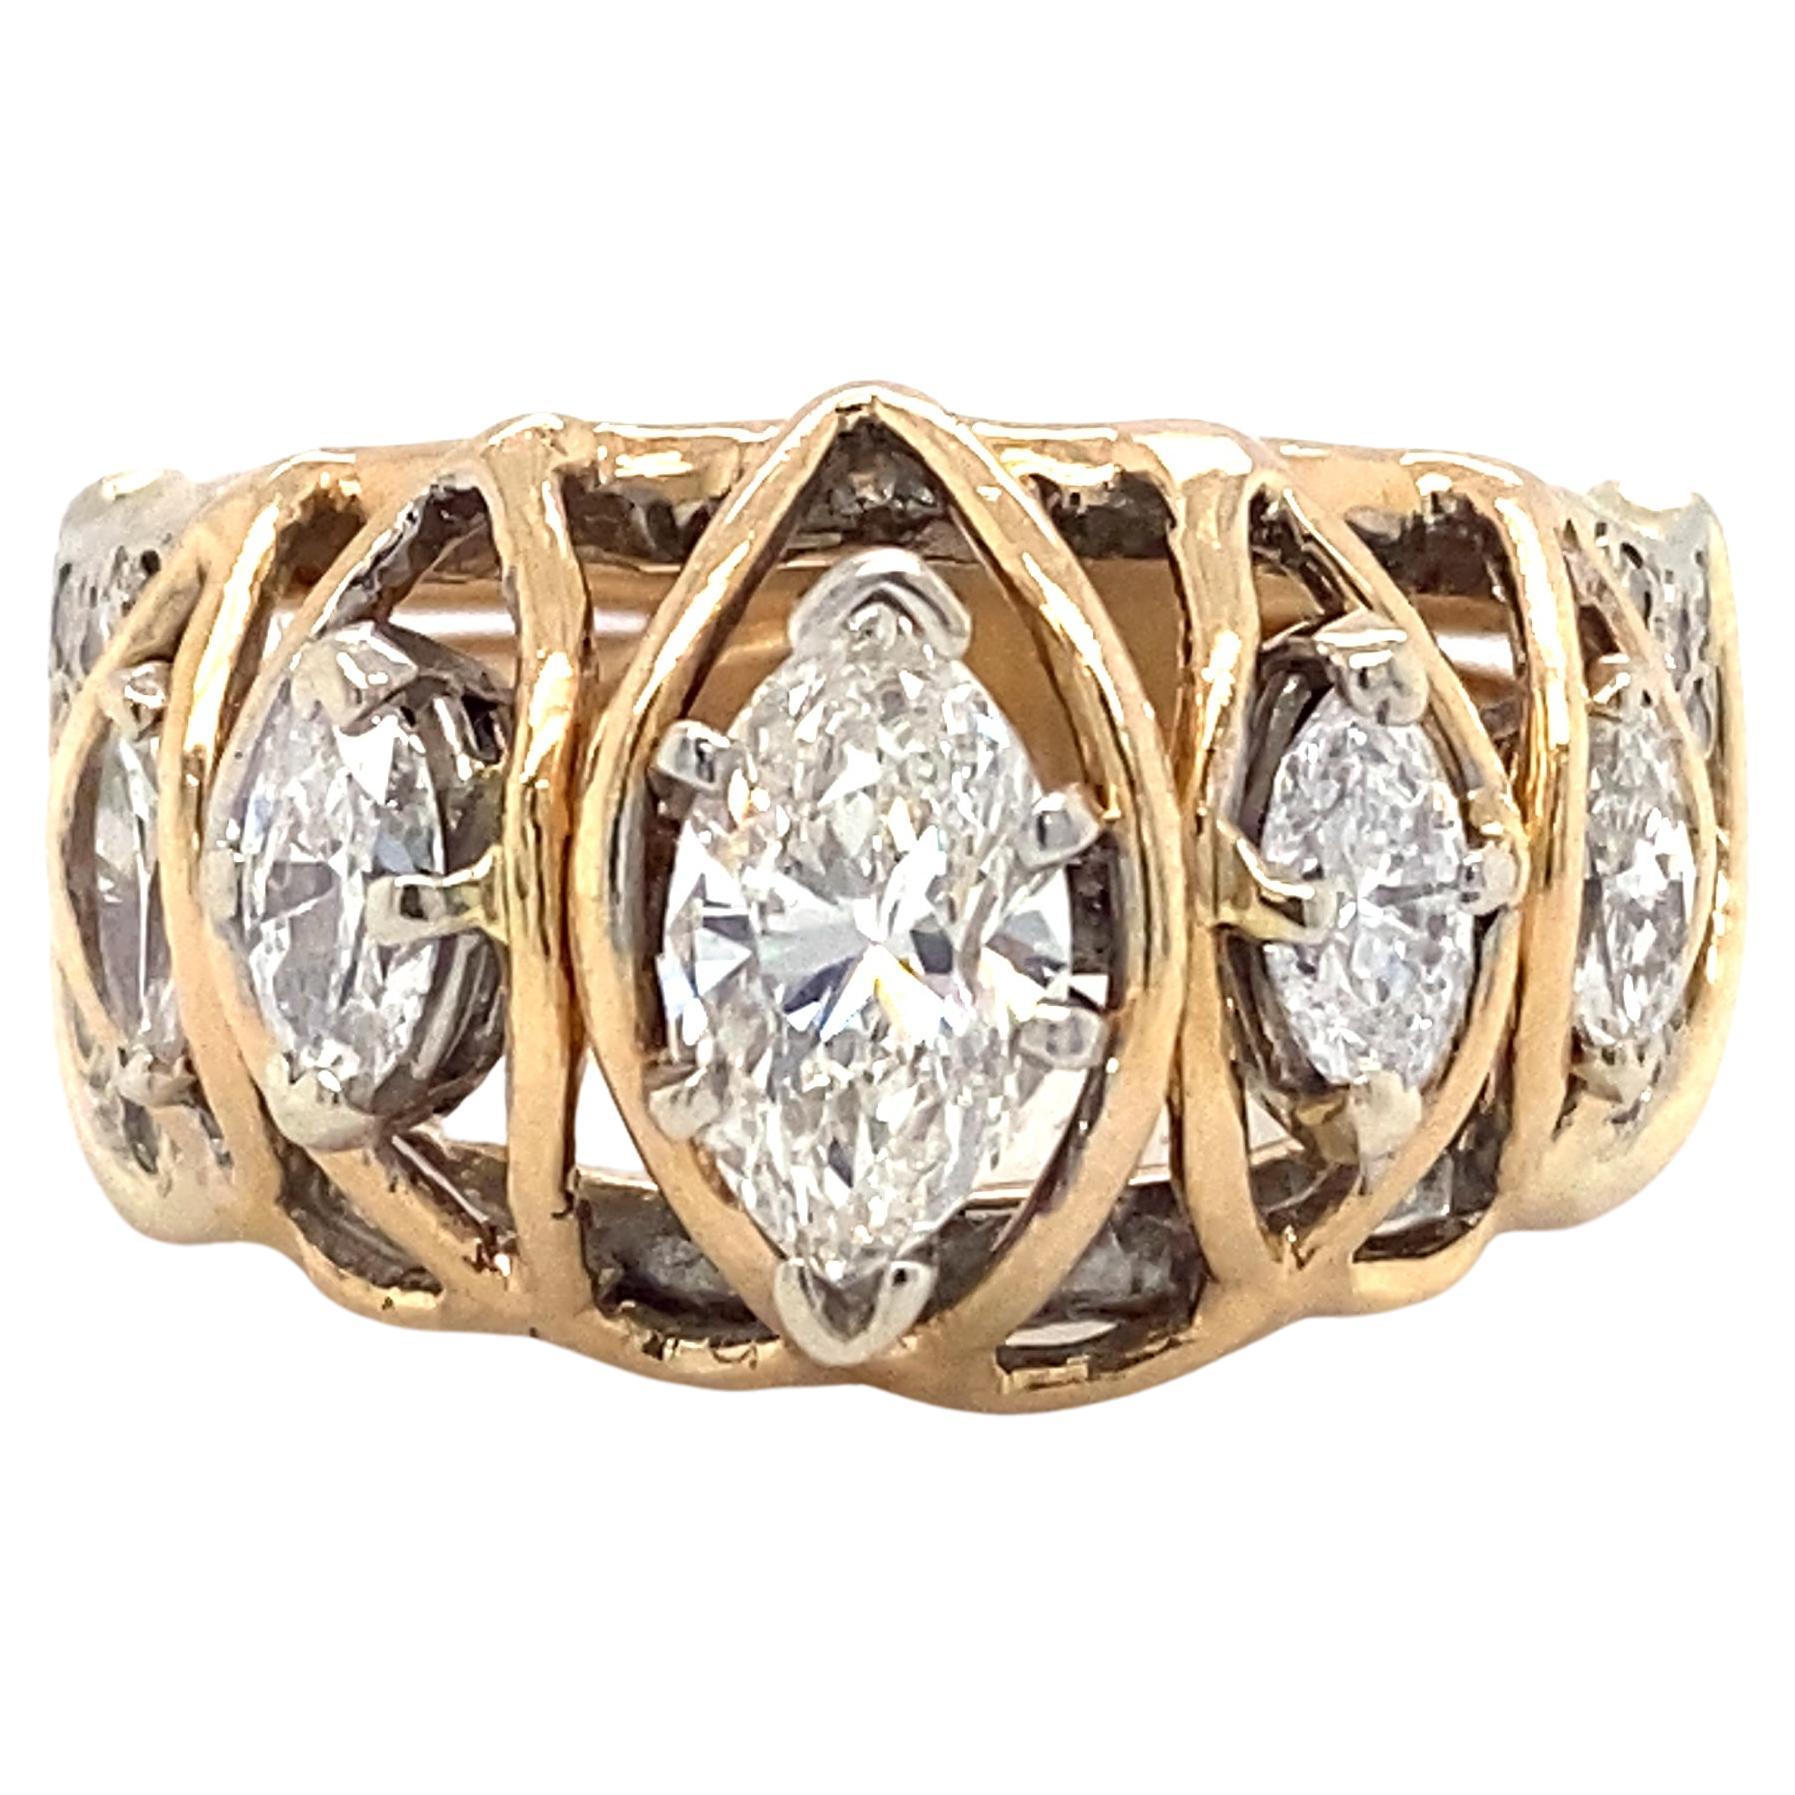 Circa 1970s 1.60 Carat Marquise Diamond Retro Ring in 14 Karat Gold For Sale